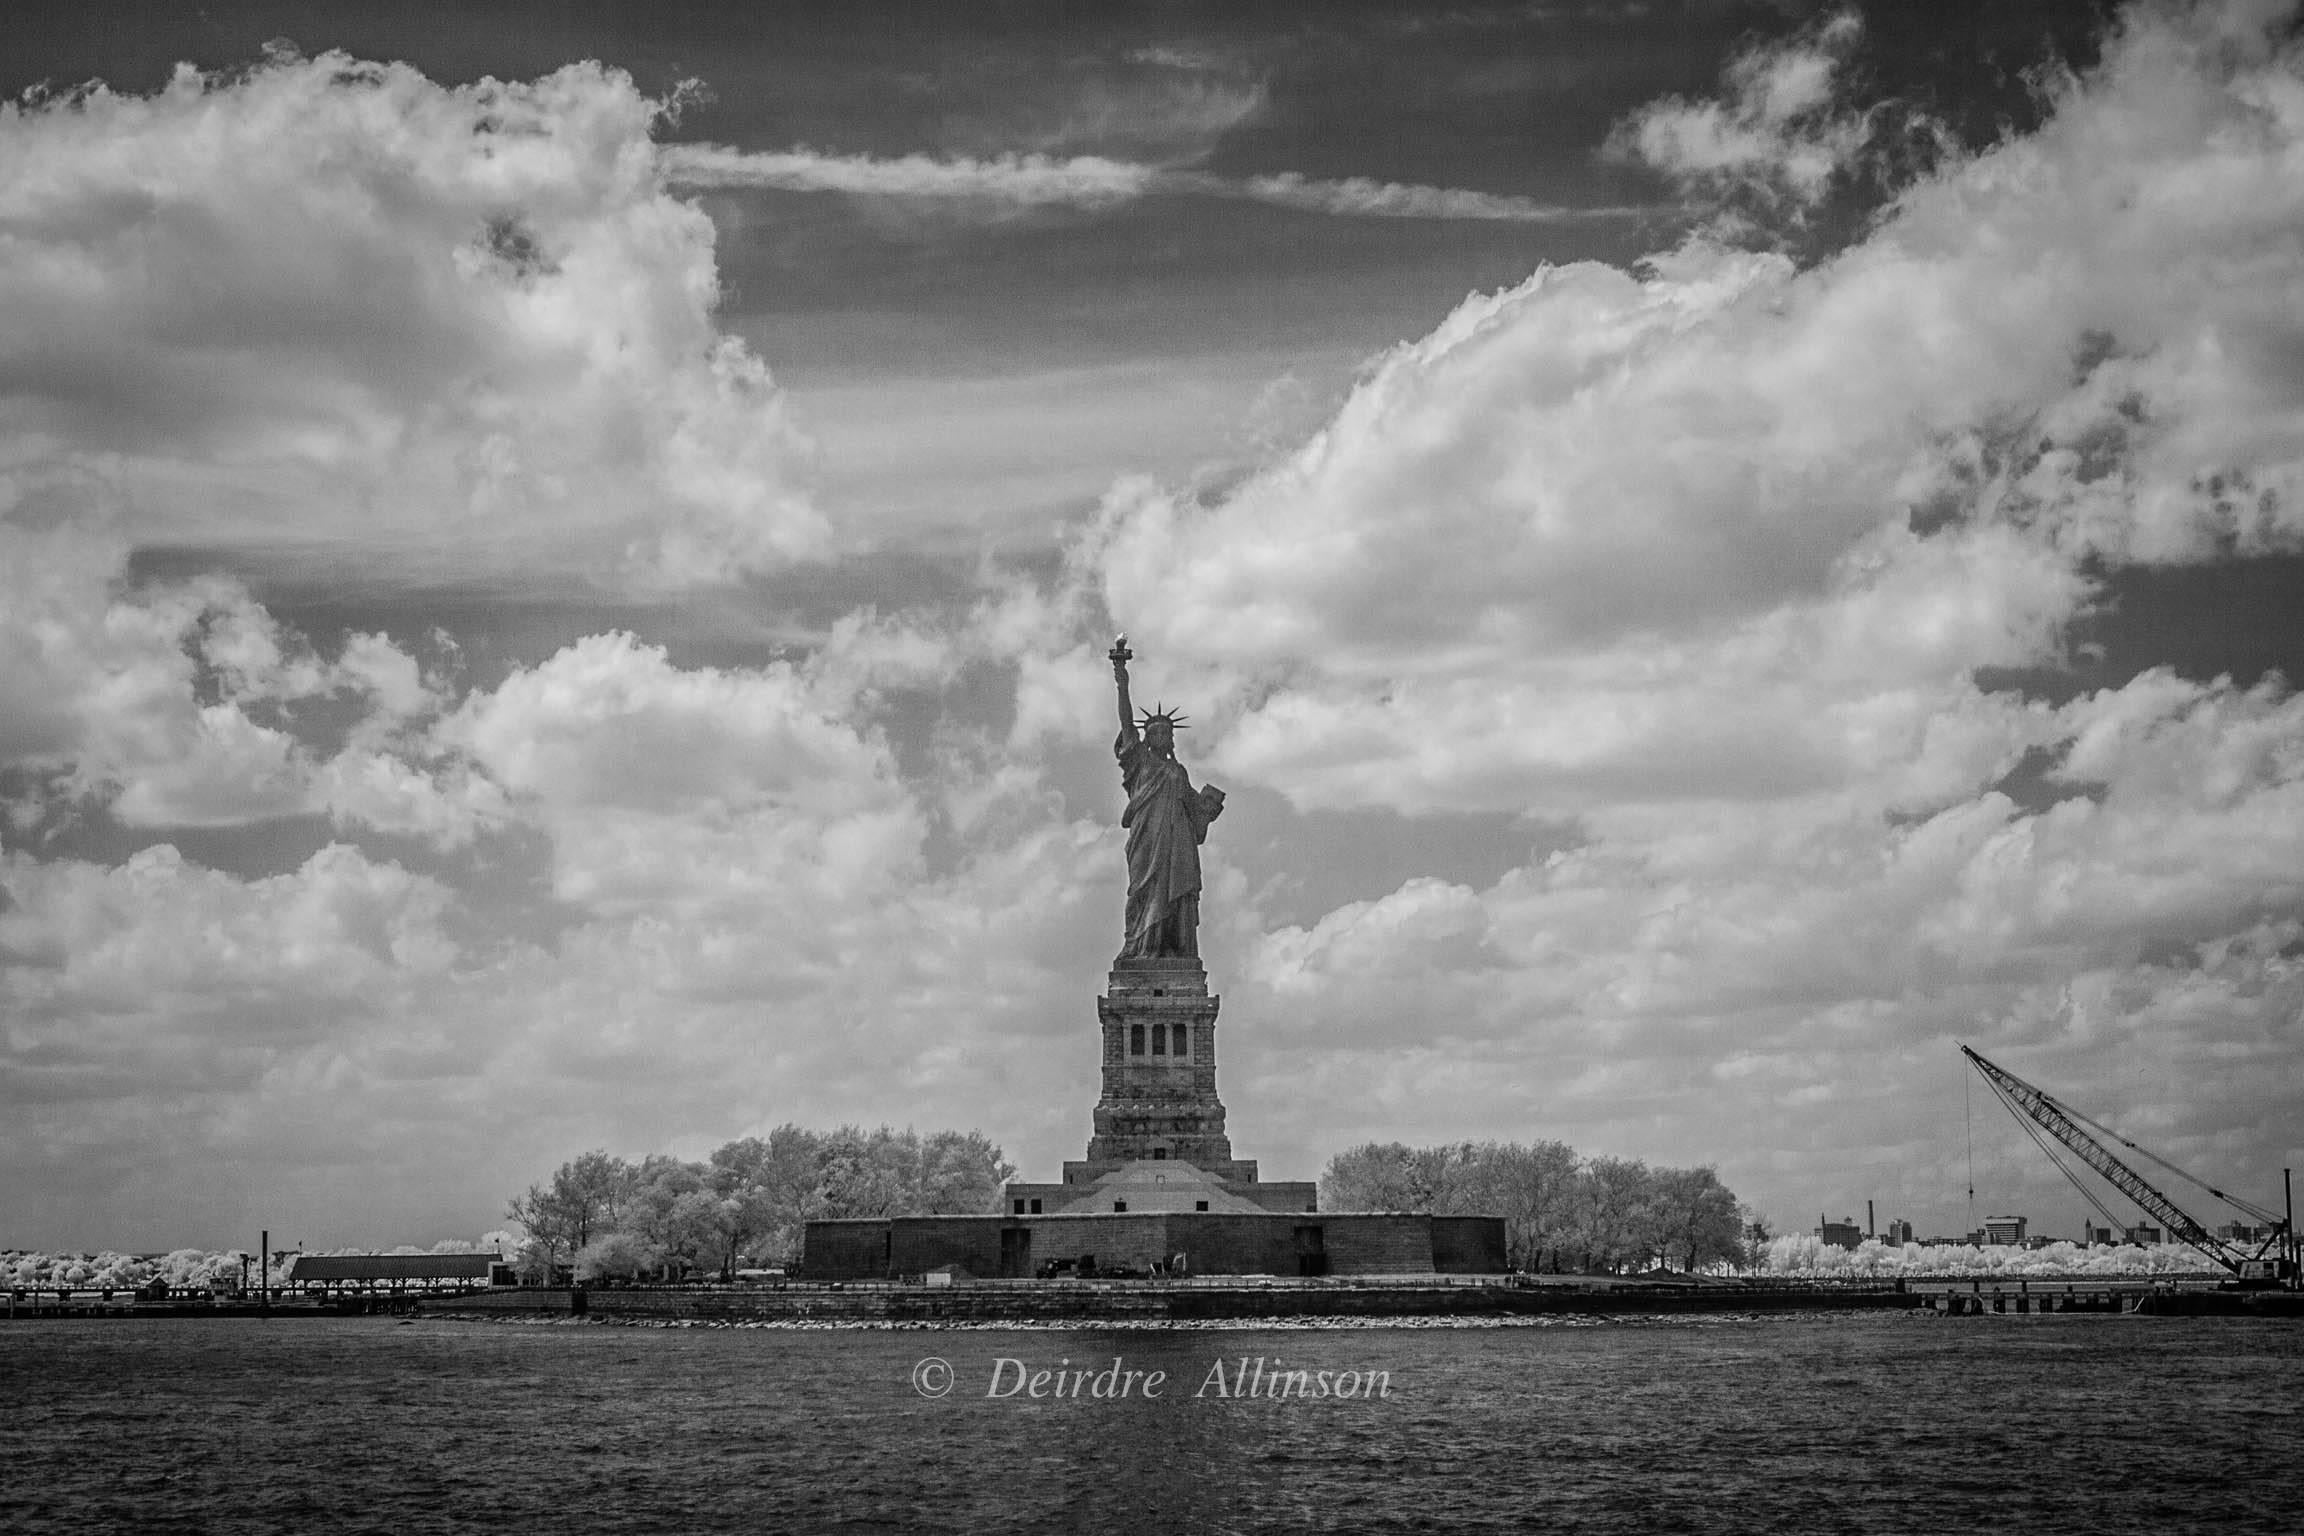 Deirdre Allinson Black and White Photograph - Freedom